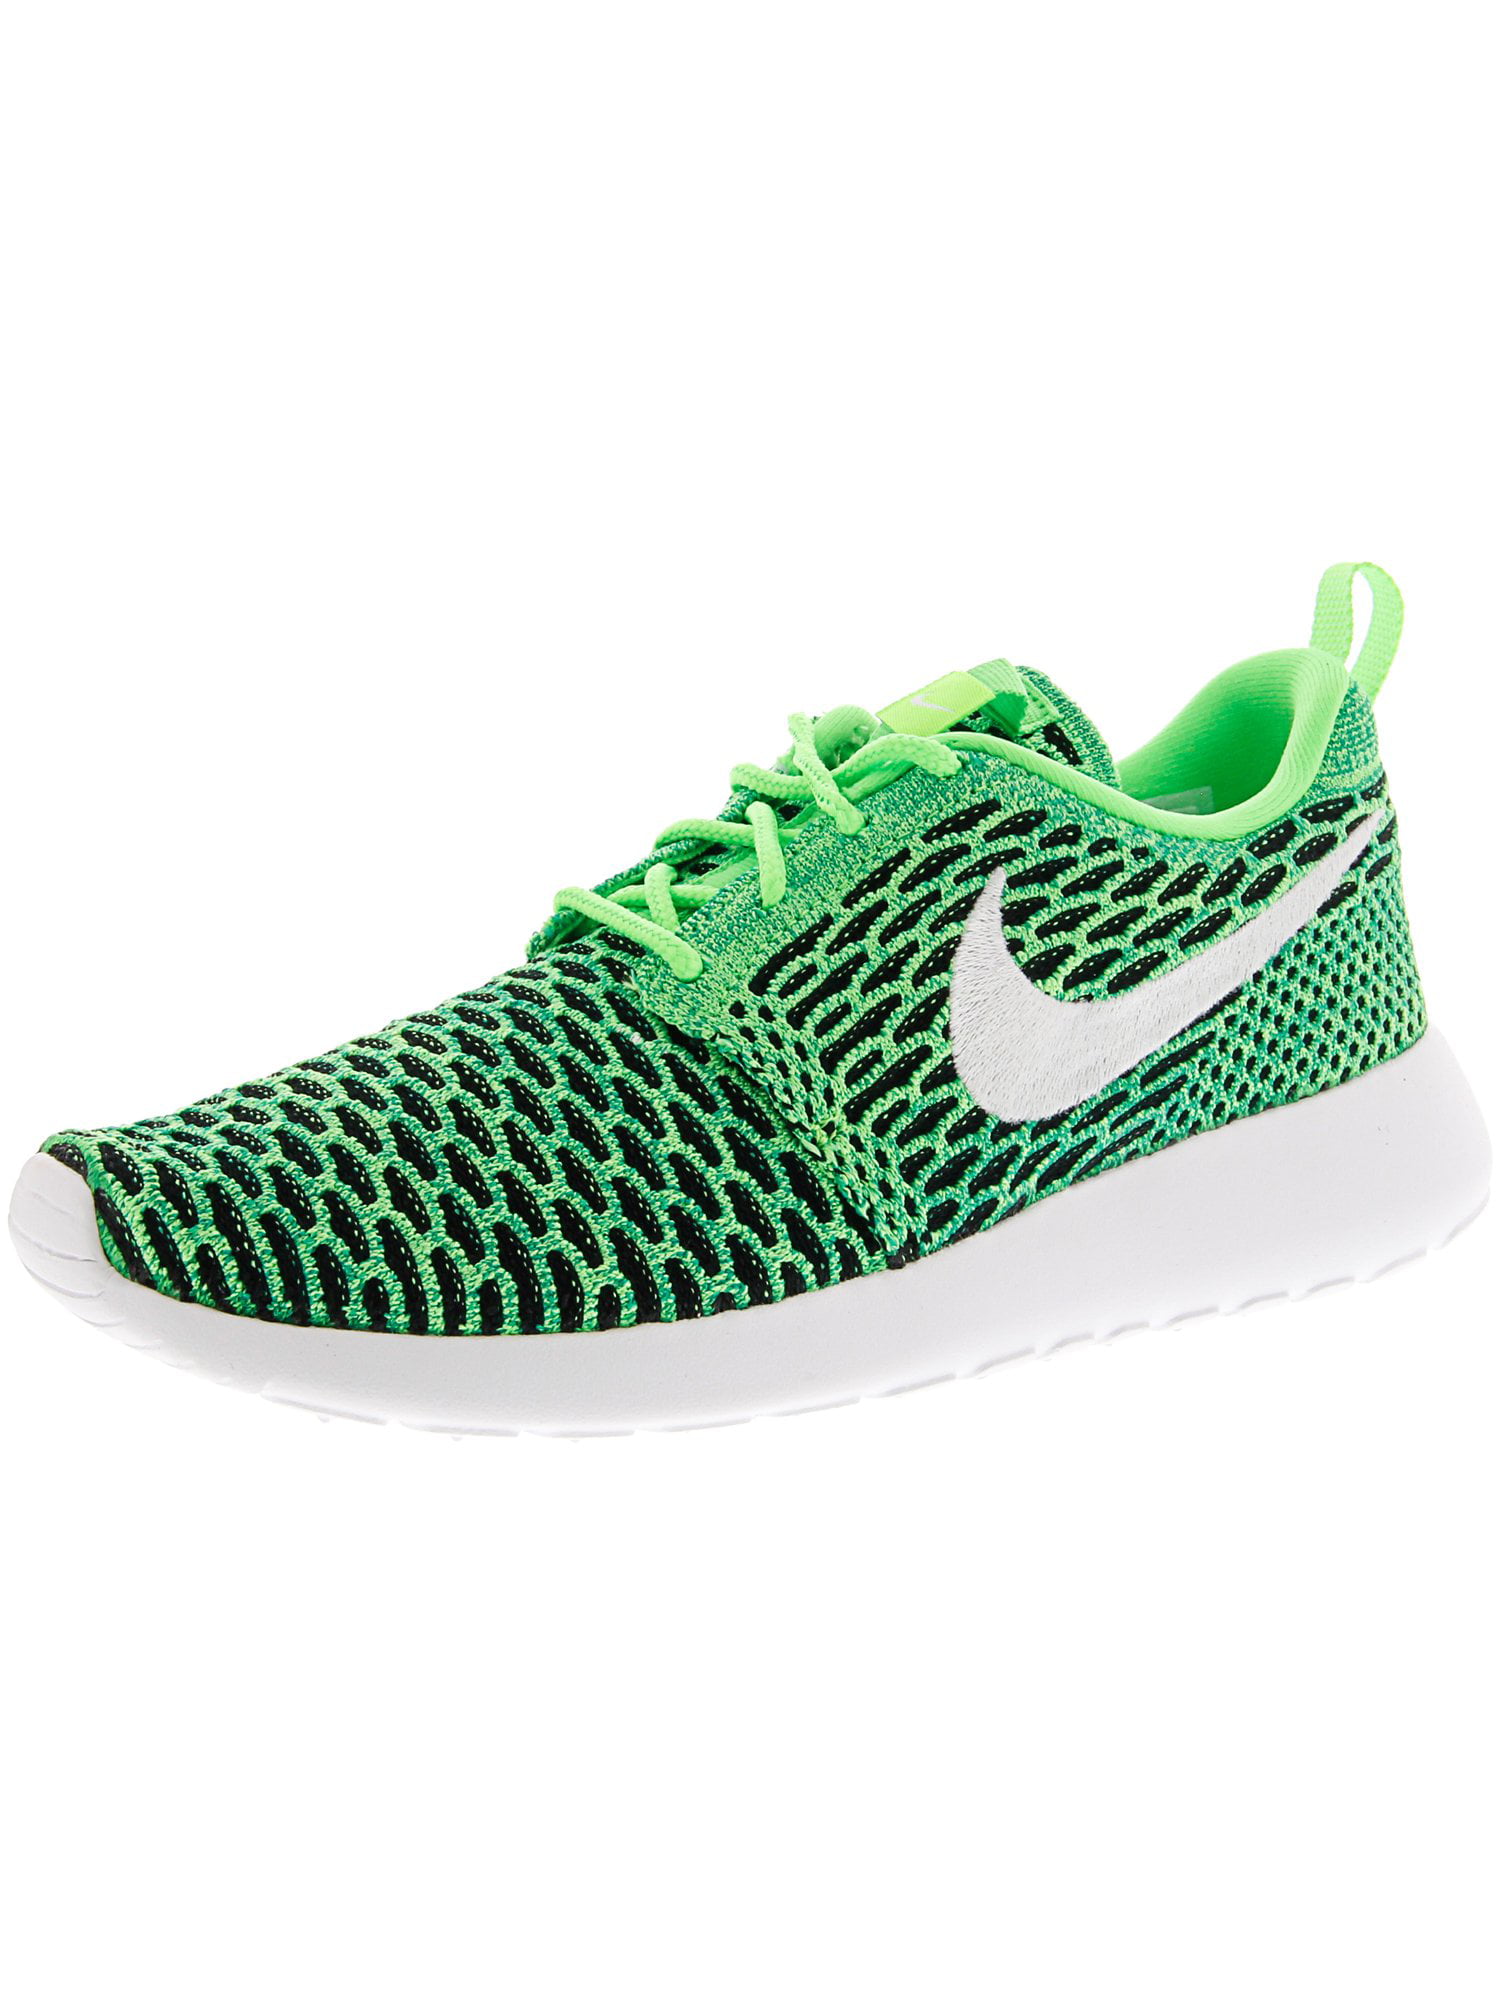 Nike Women's Roshe One Flyknit Voltage Green Lcd Running Shoe - - Walmart.com